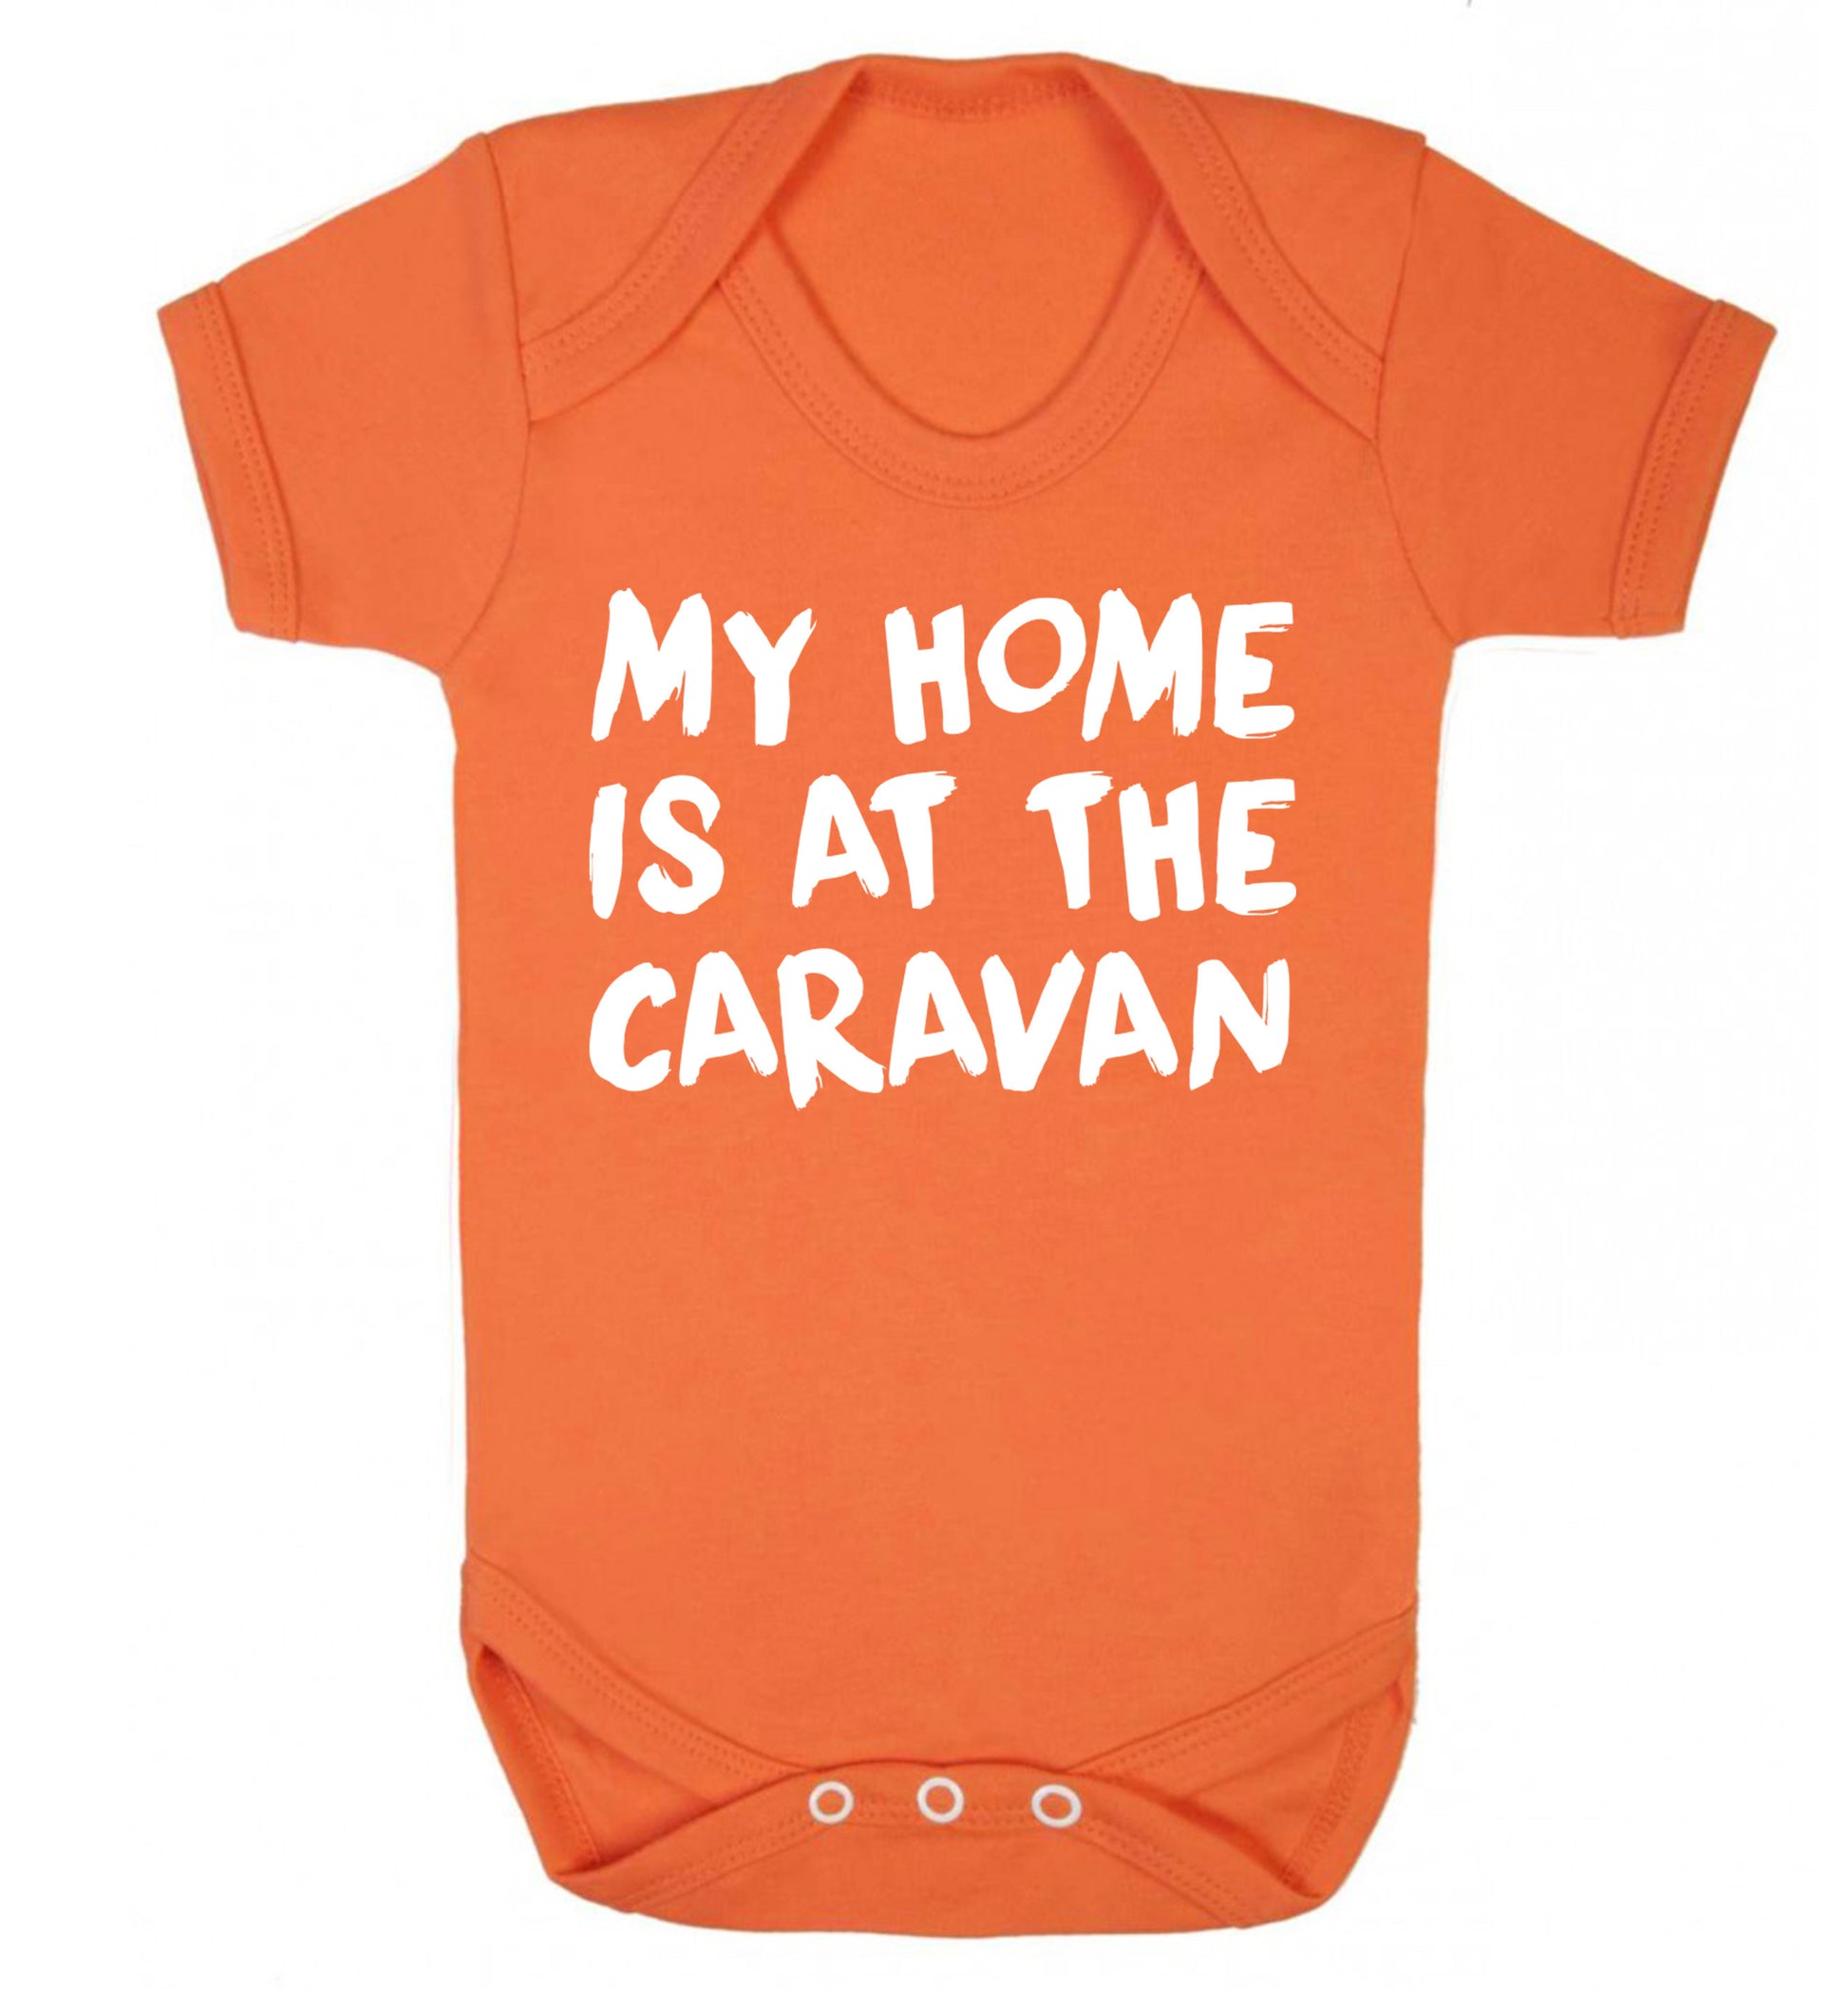 My home is at the caravan Baby Vest orange 18-24 months